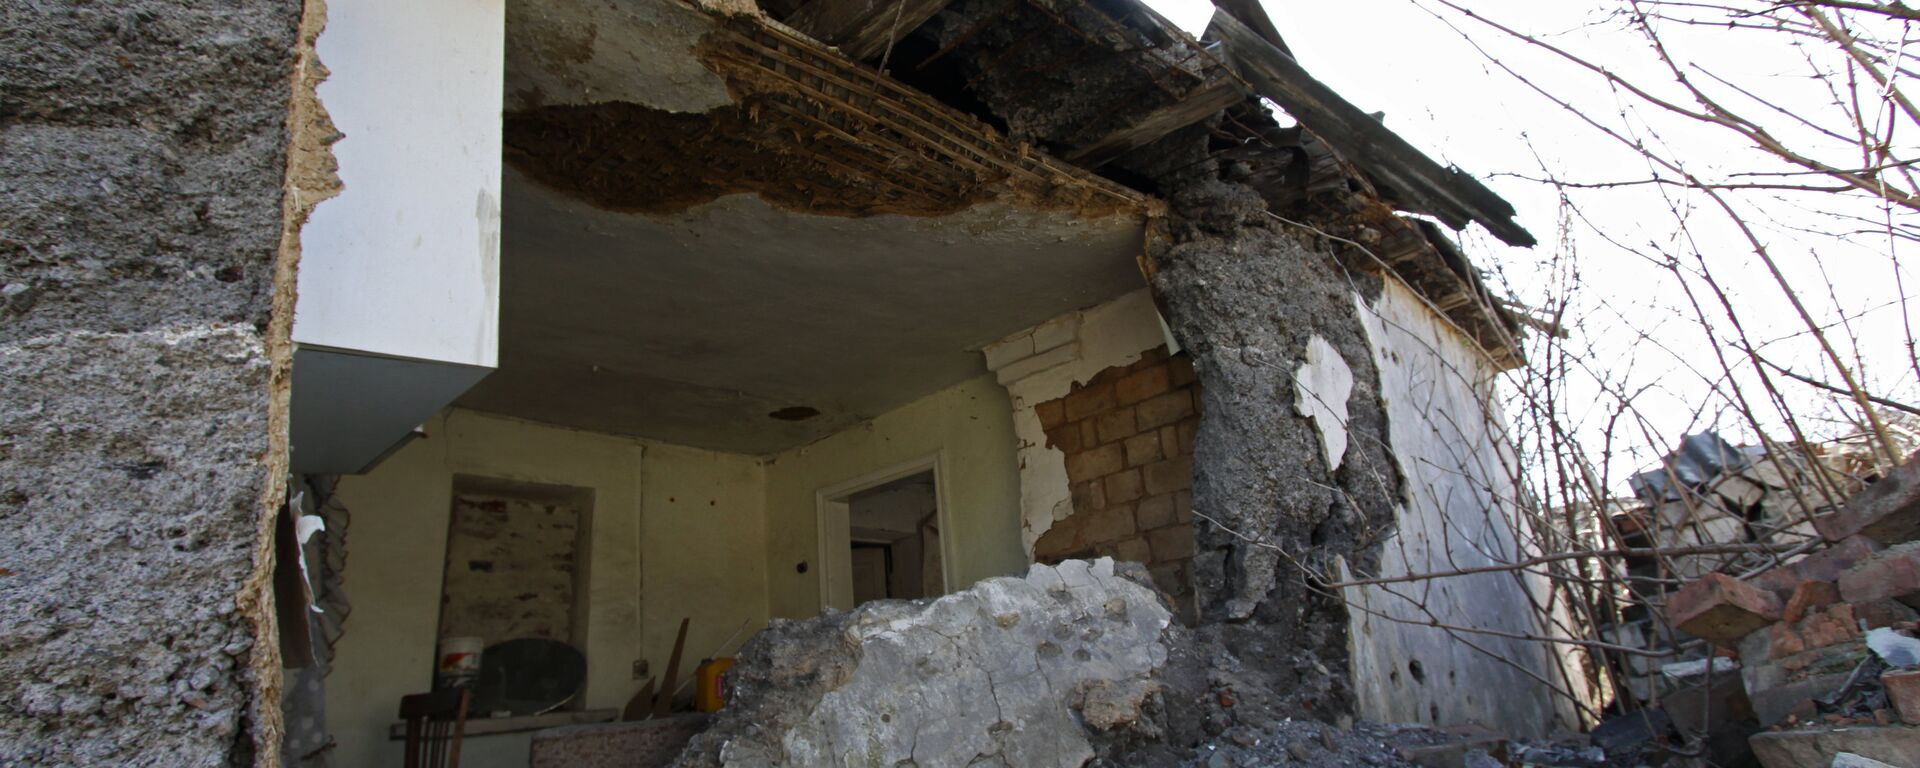 The house, damaged as a result of shelling, in the Kiev district of Donetsk - Sputnik International, 1920, 06.03.2022